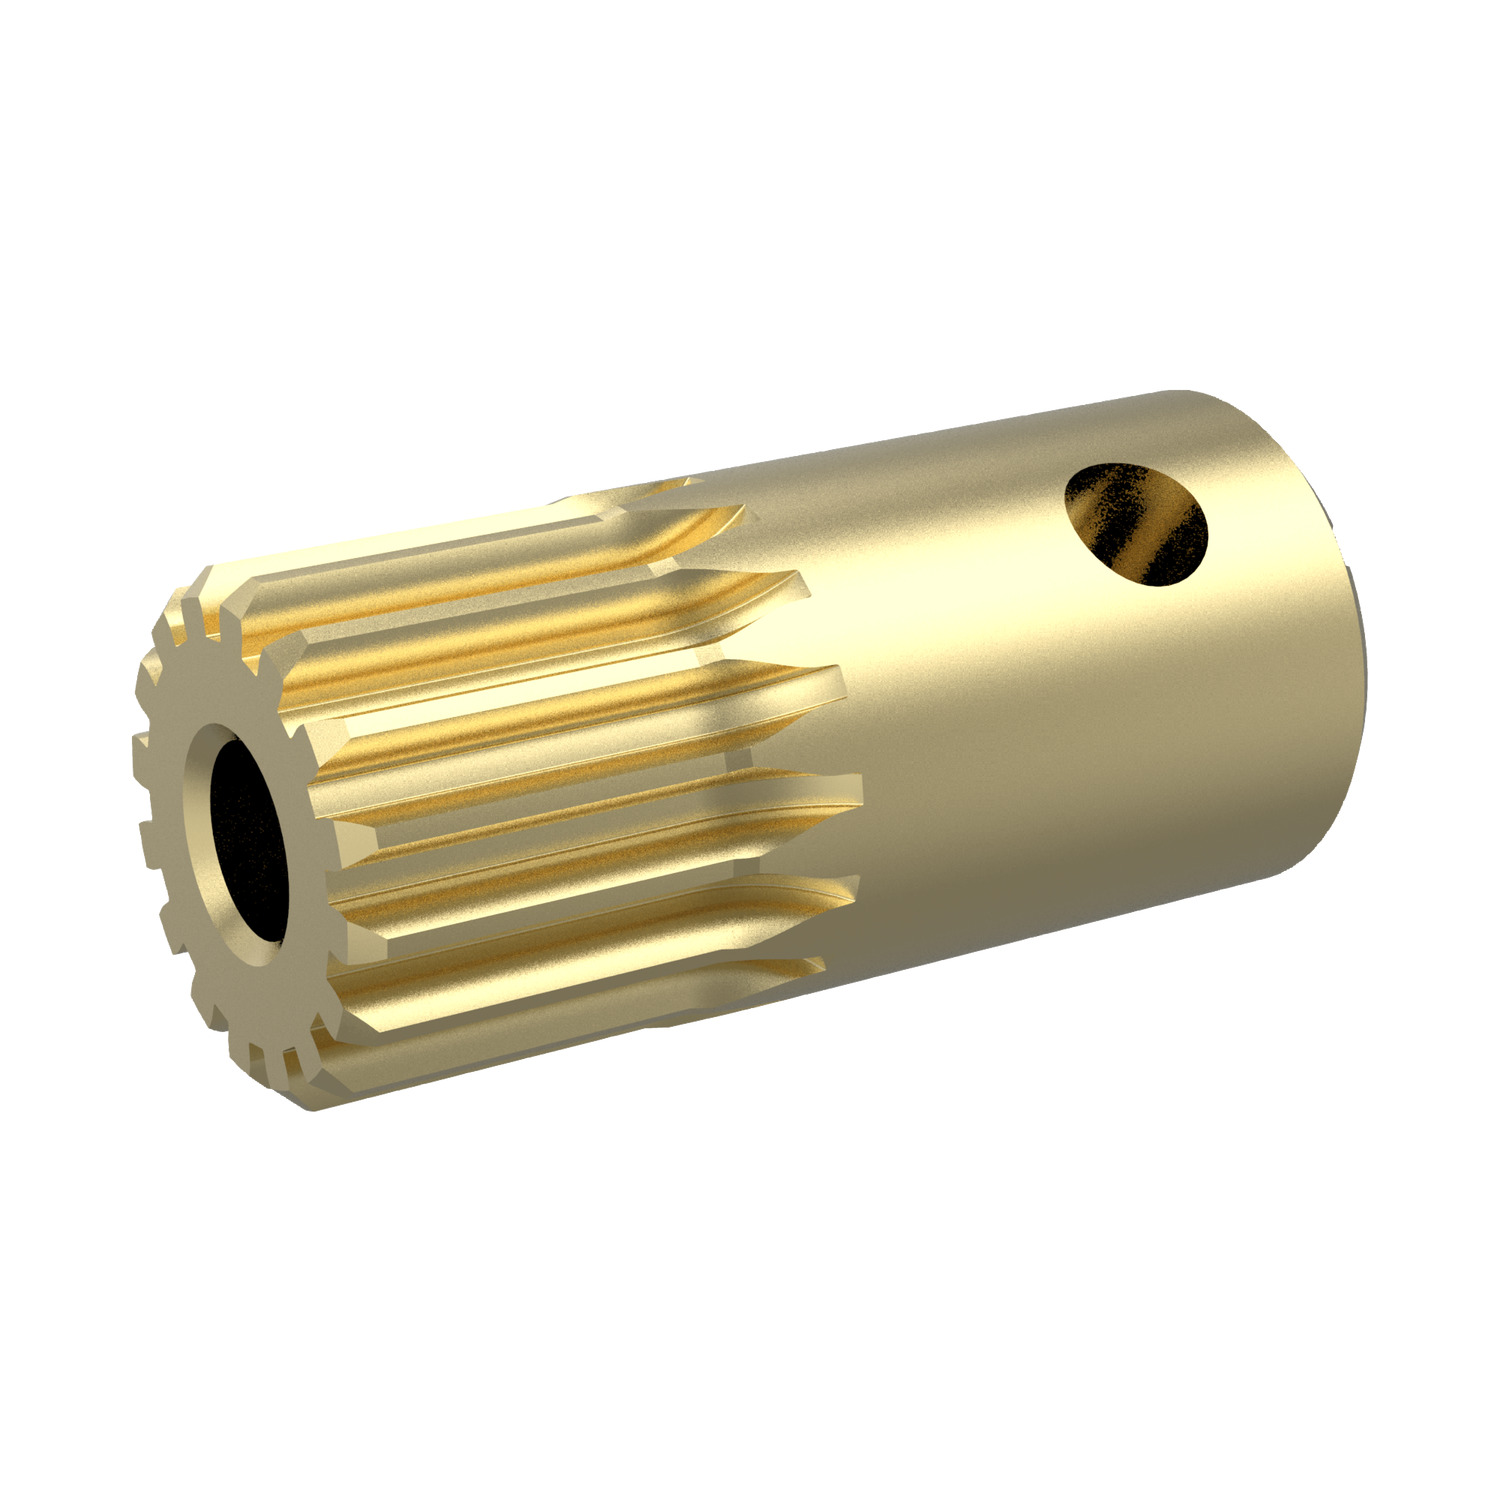 Product R5100, Spur Gears - Module 0.3 brass - 14-18 teeth / 